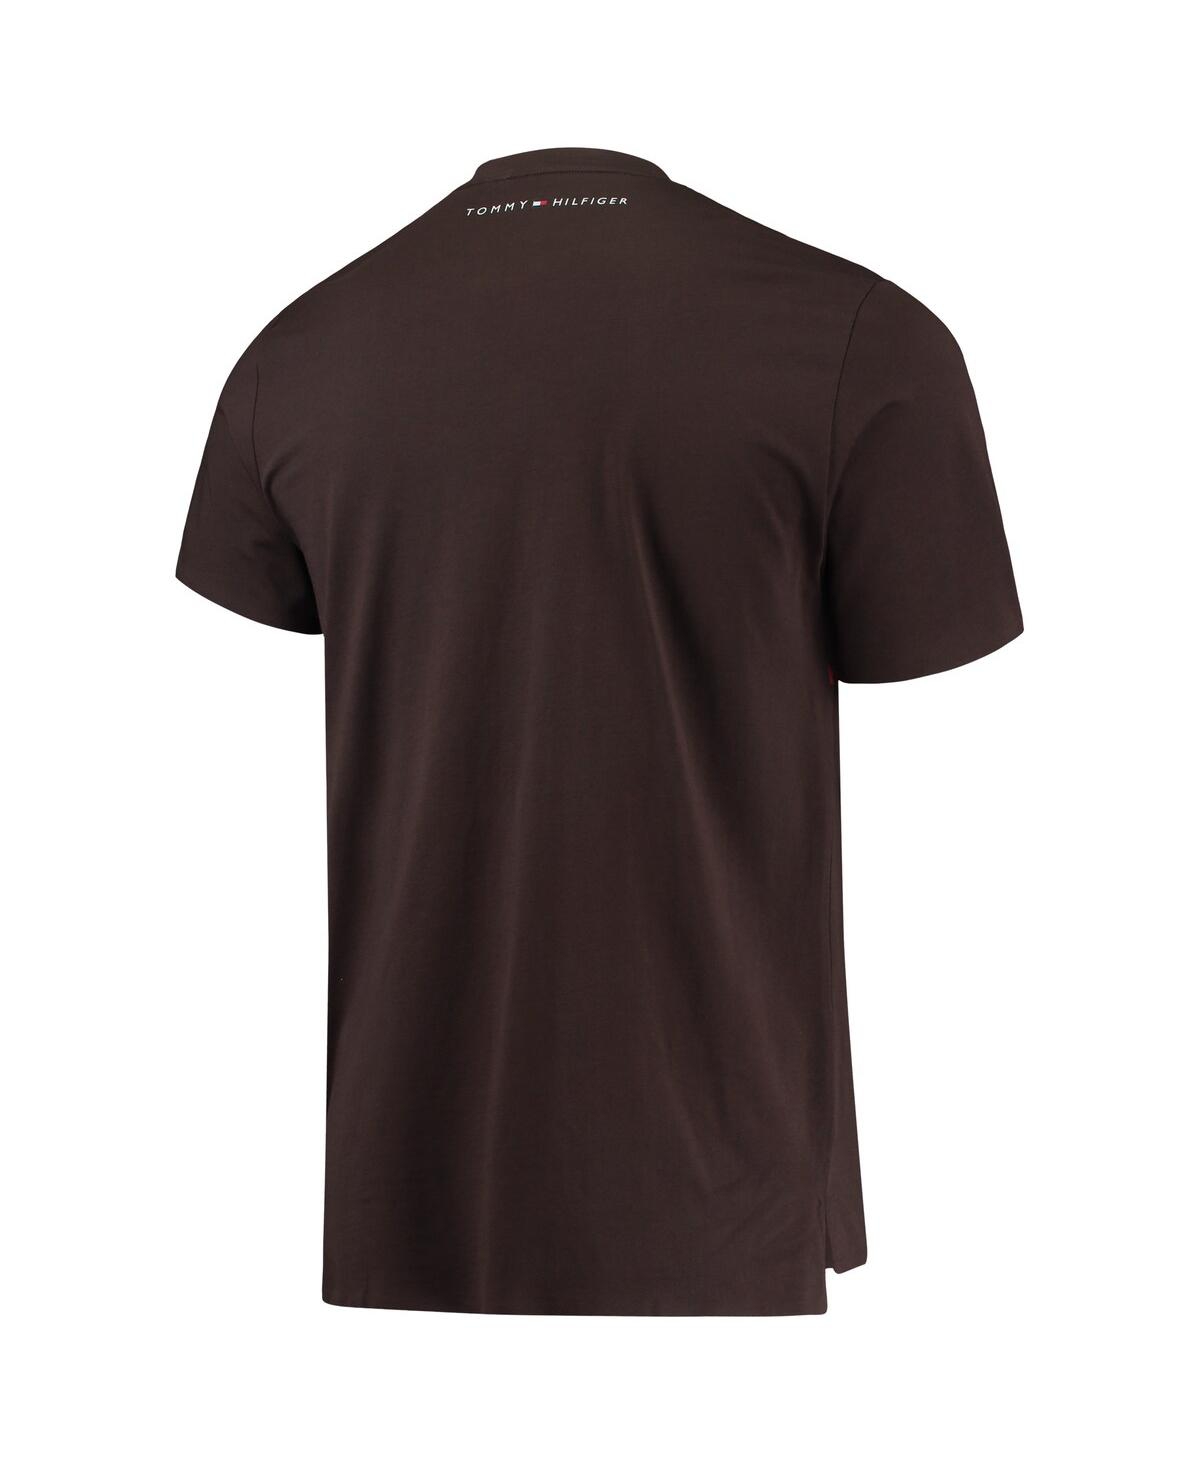 Shop Tommy Hilfiger Men's  Brown Cleveland Browns The Travis T-shirt